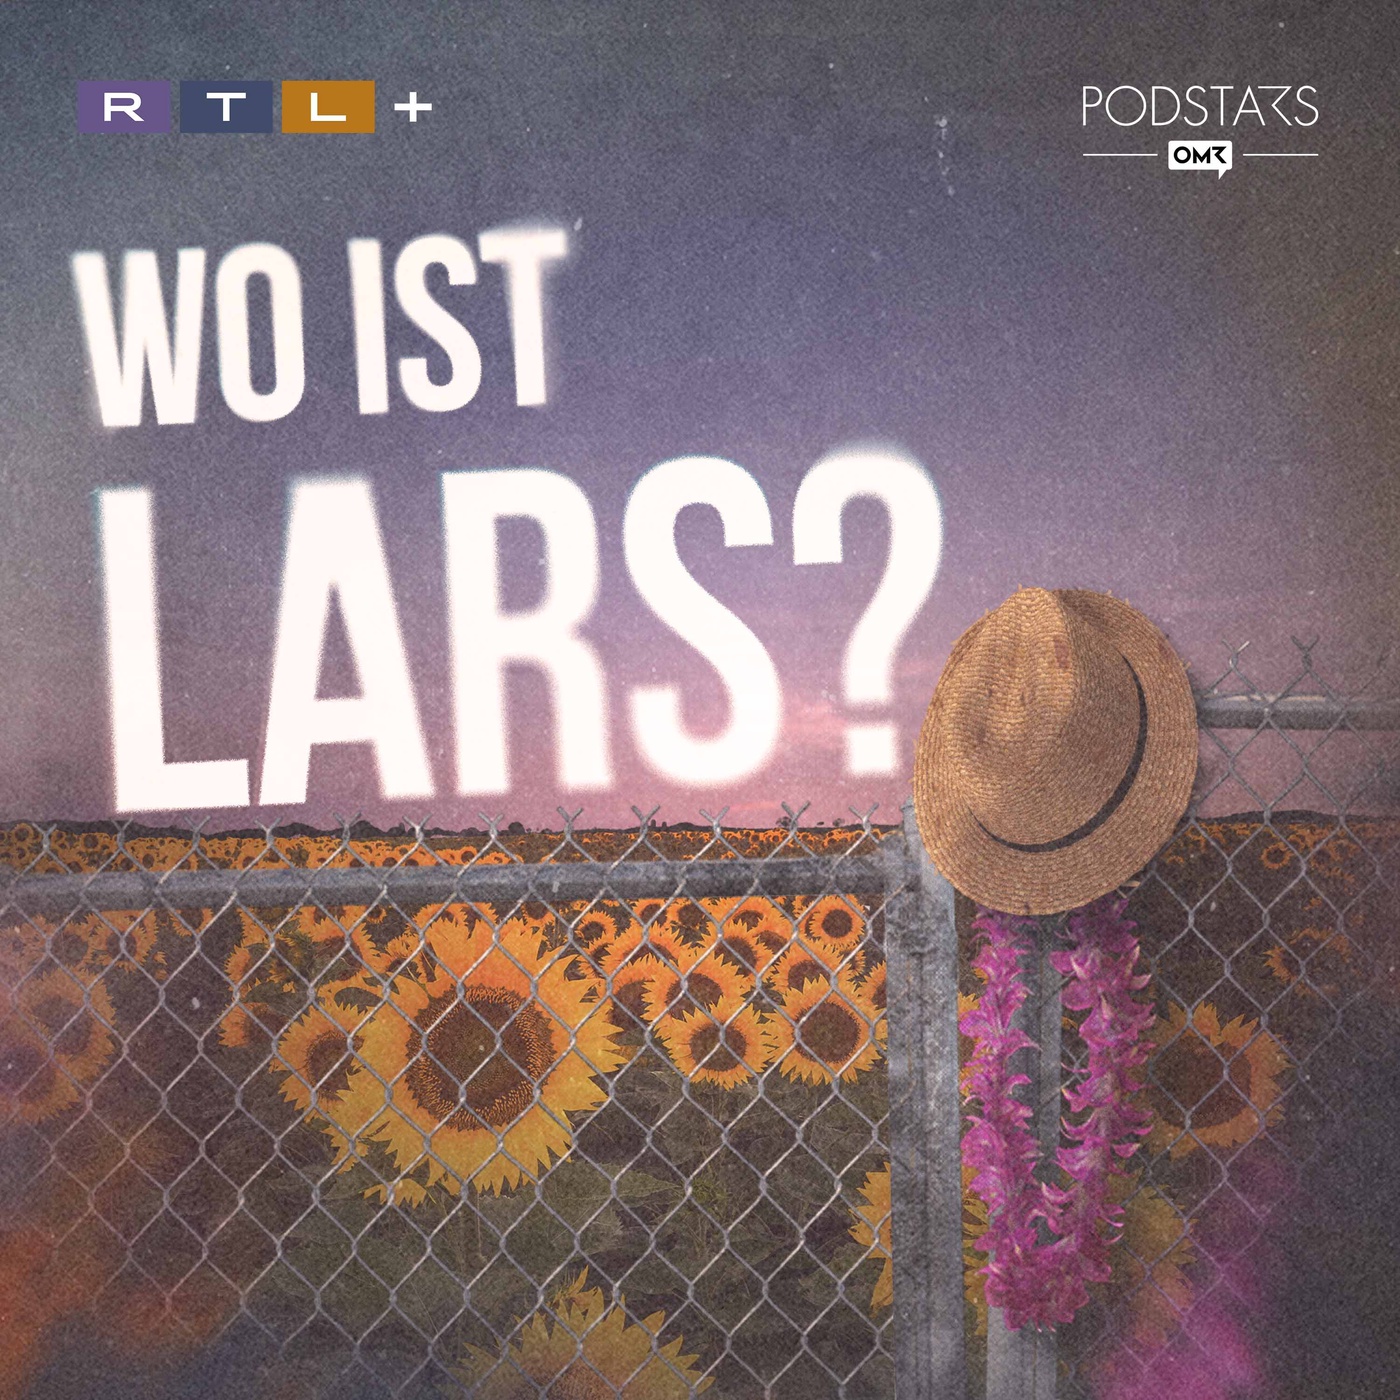 Podcast-Empfehlung: Wo ist Lars? - Folge 1: Schmetterlingseffekt